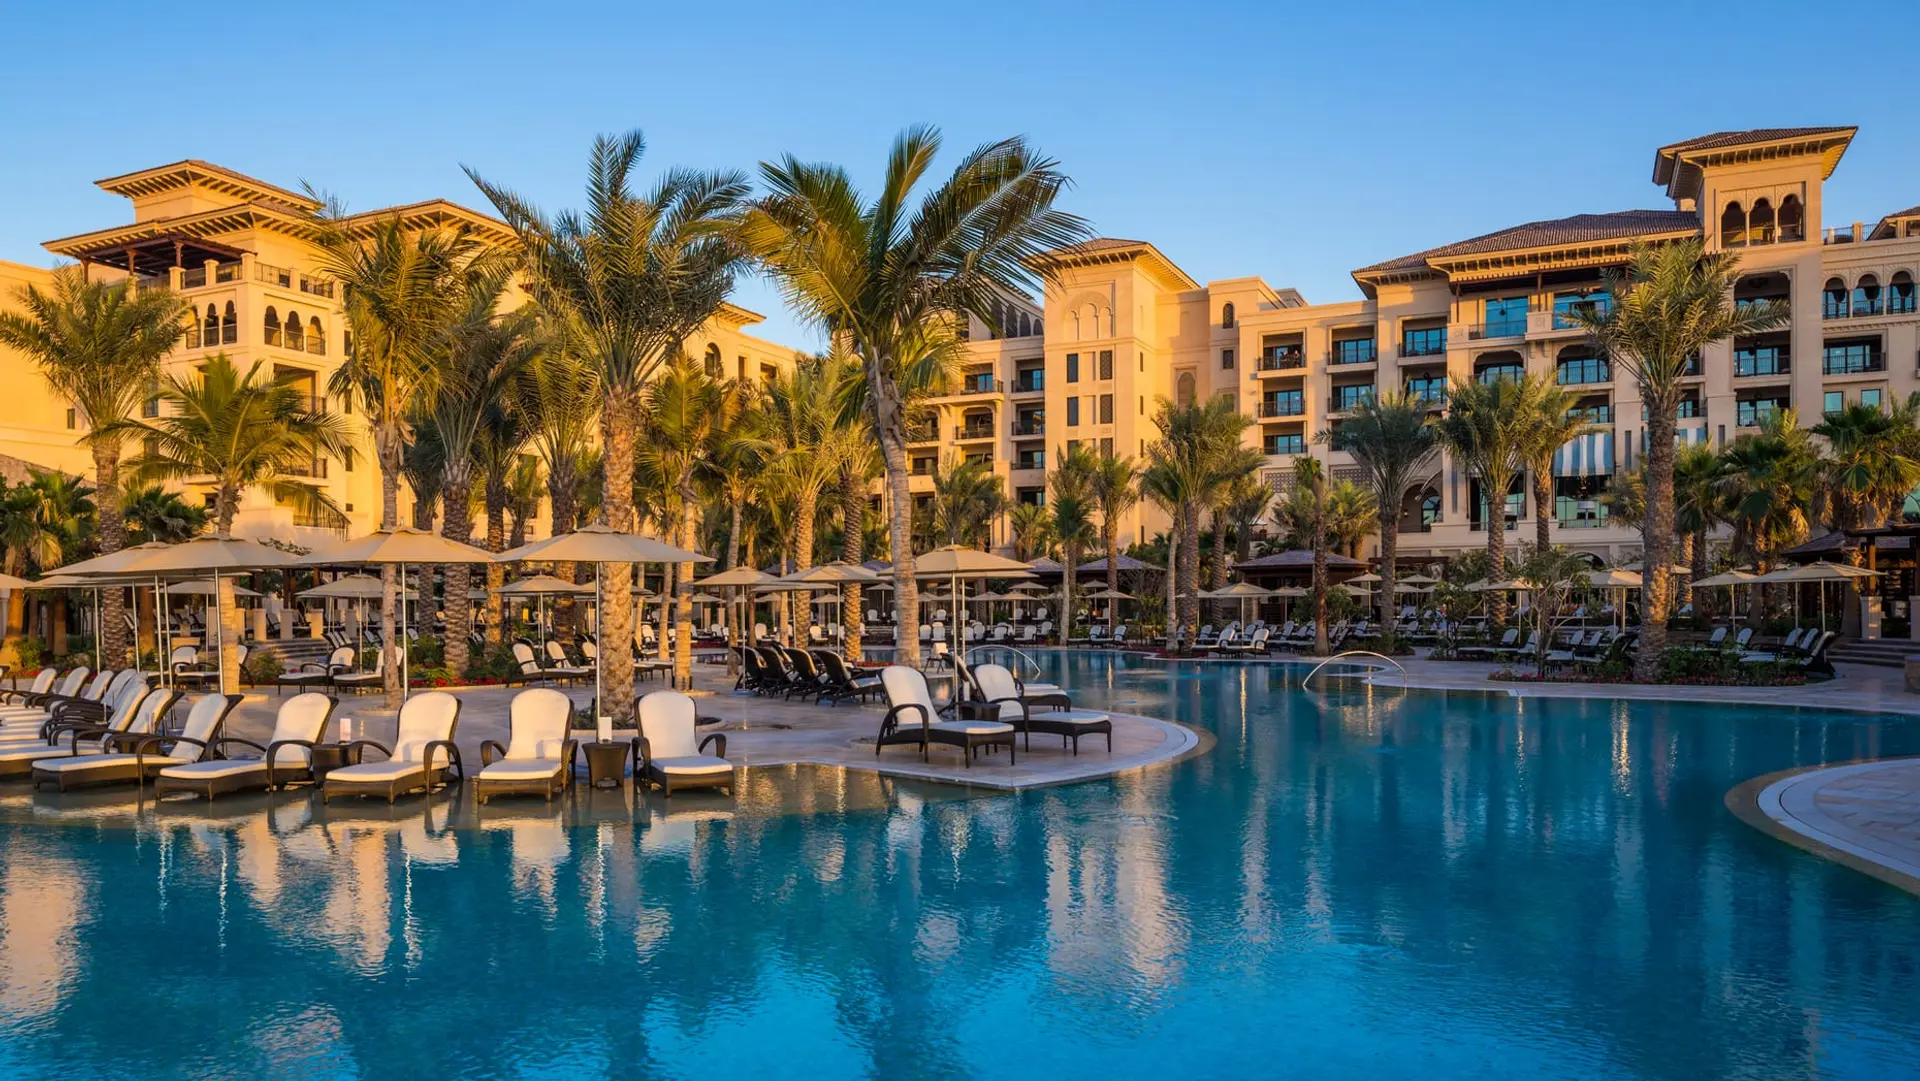 Hotel review Service & Facilities' - Four Seasons Resort Dubai at Jumeirah Beach - 0